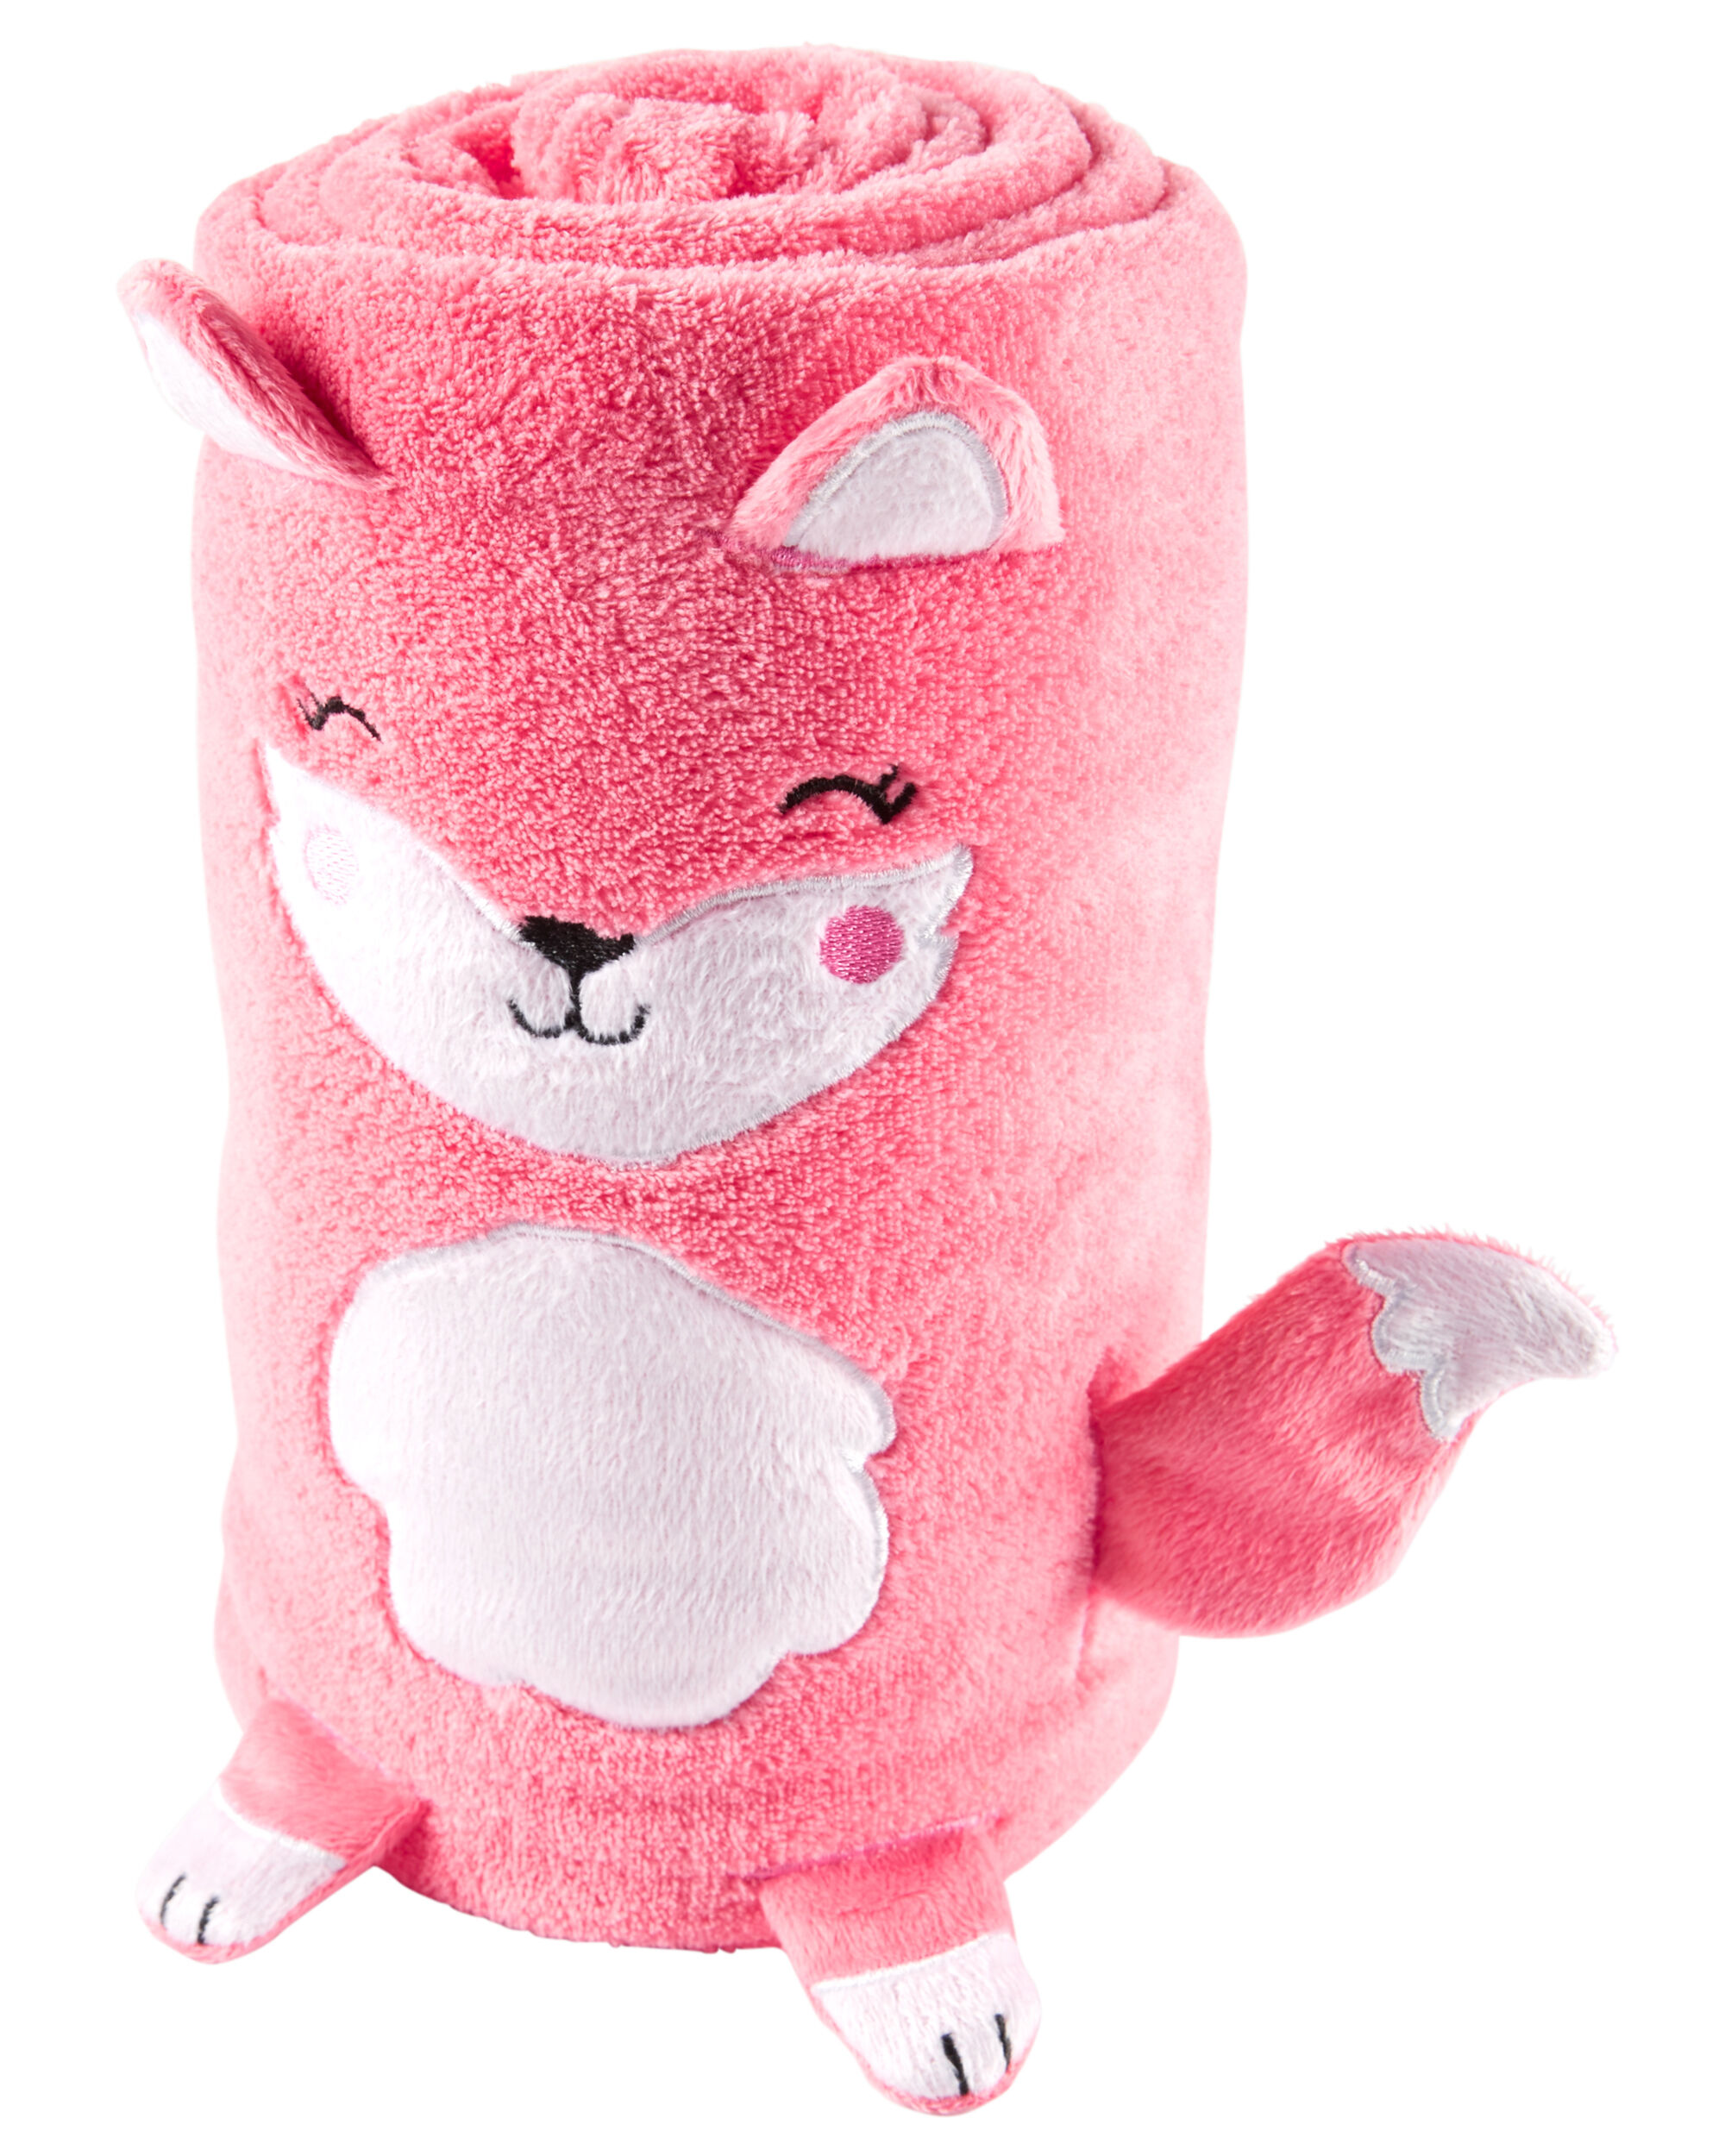 carters pink fox stuffed animal